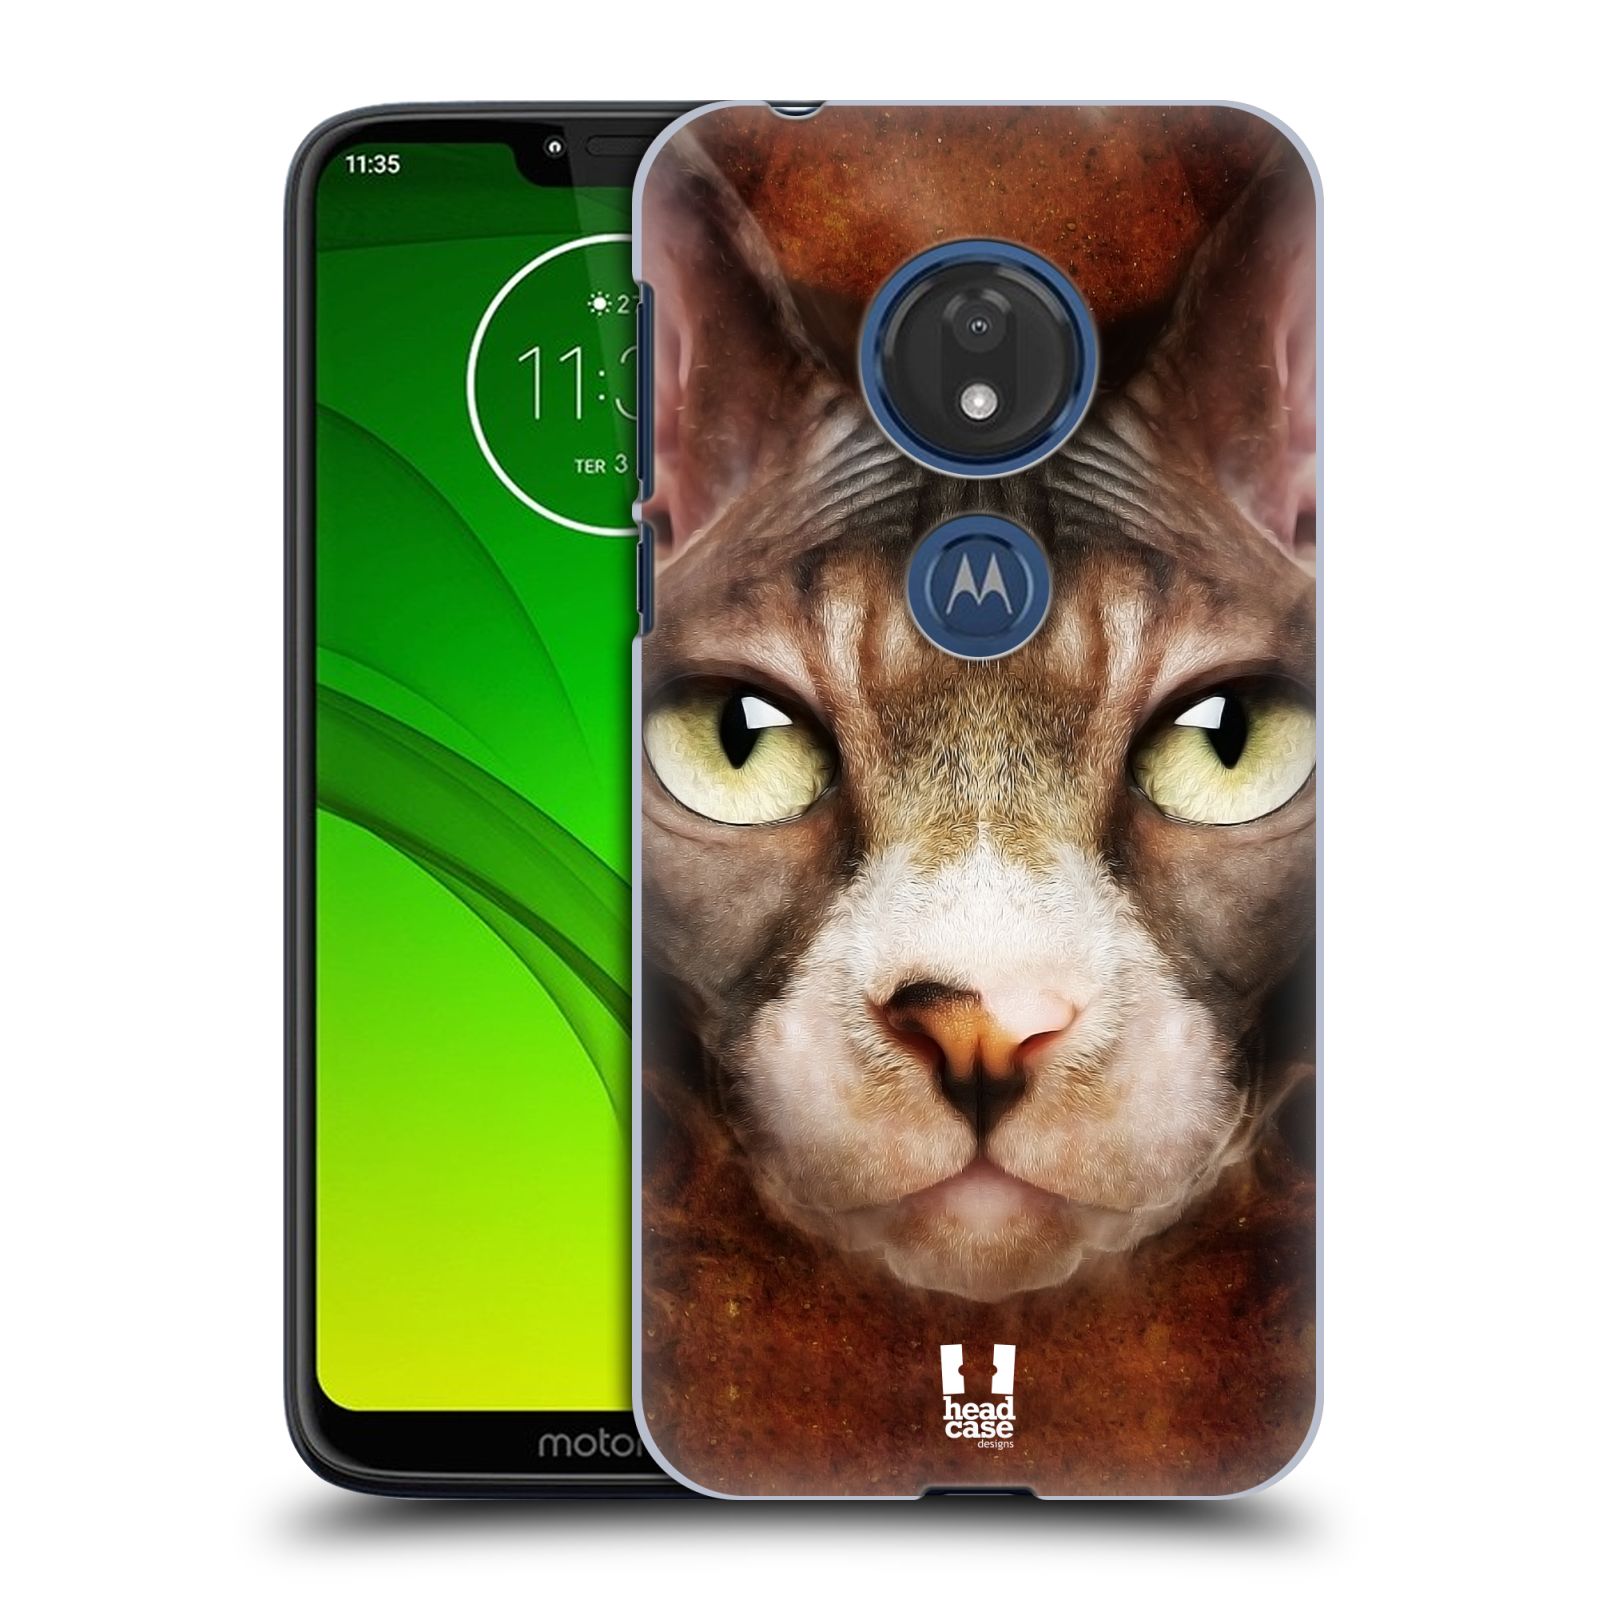 Pouzdro na mobil Motorola Moto G7 Play vzor Zvířecí tváře kočka sphynx